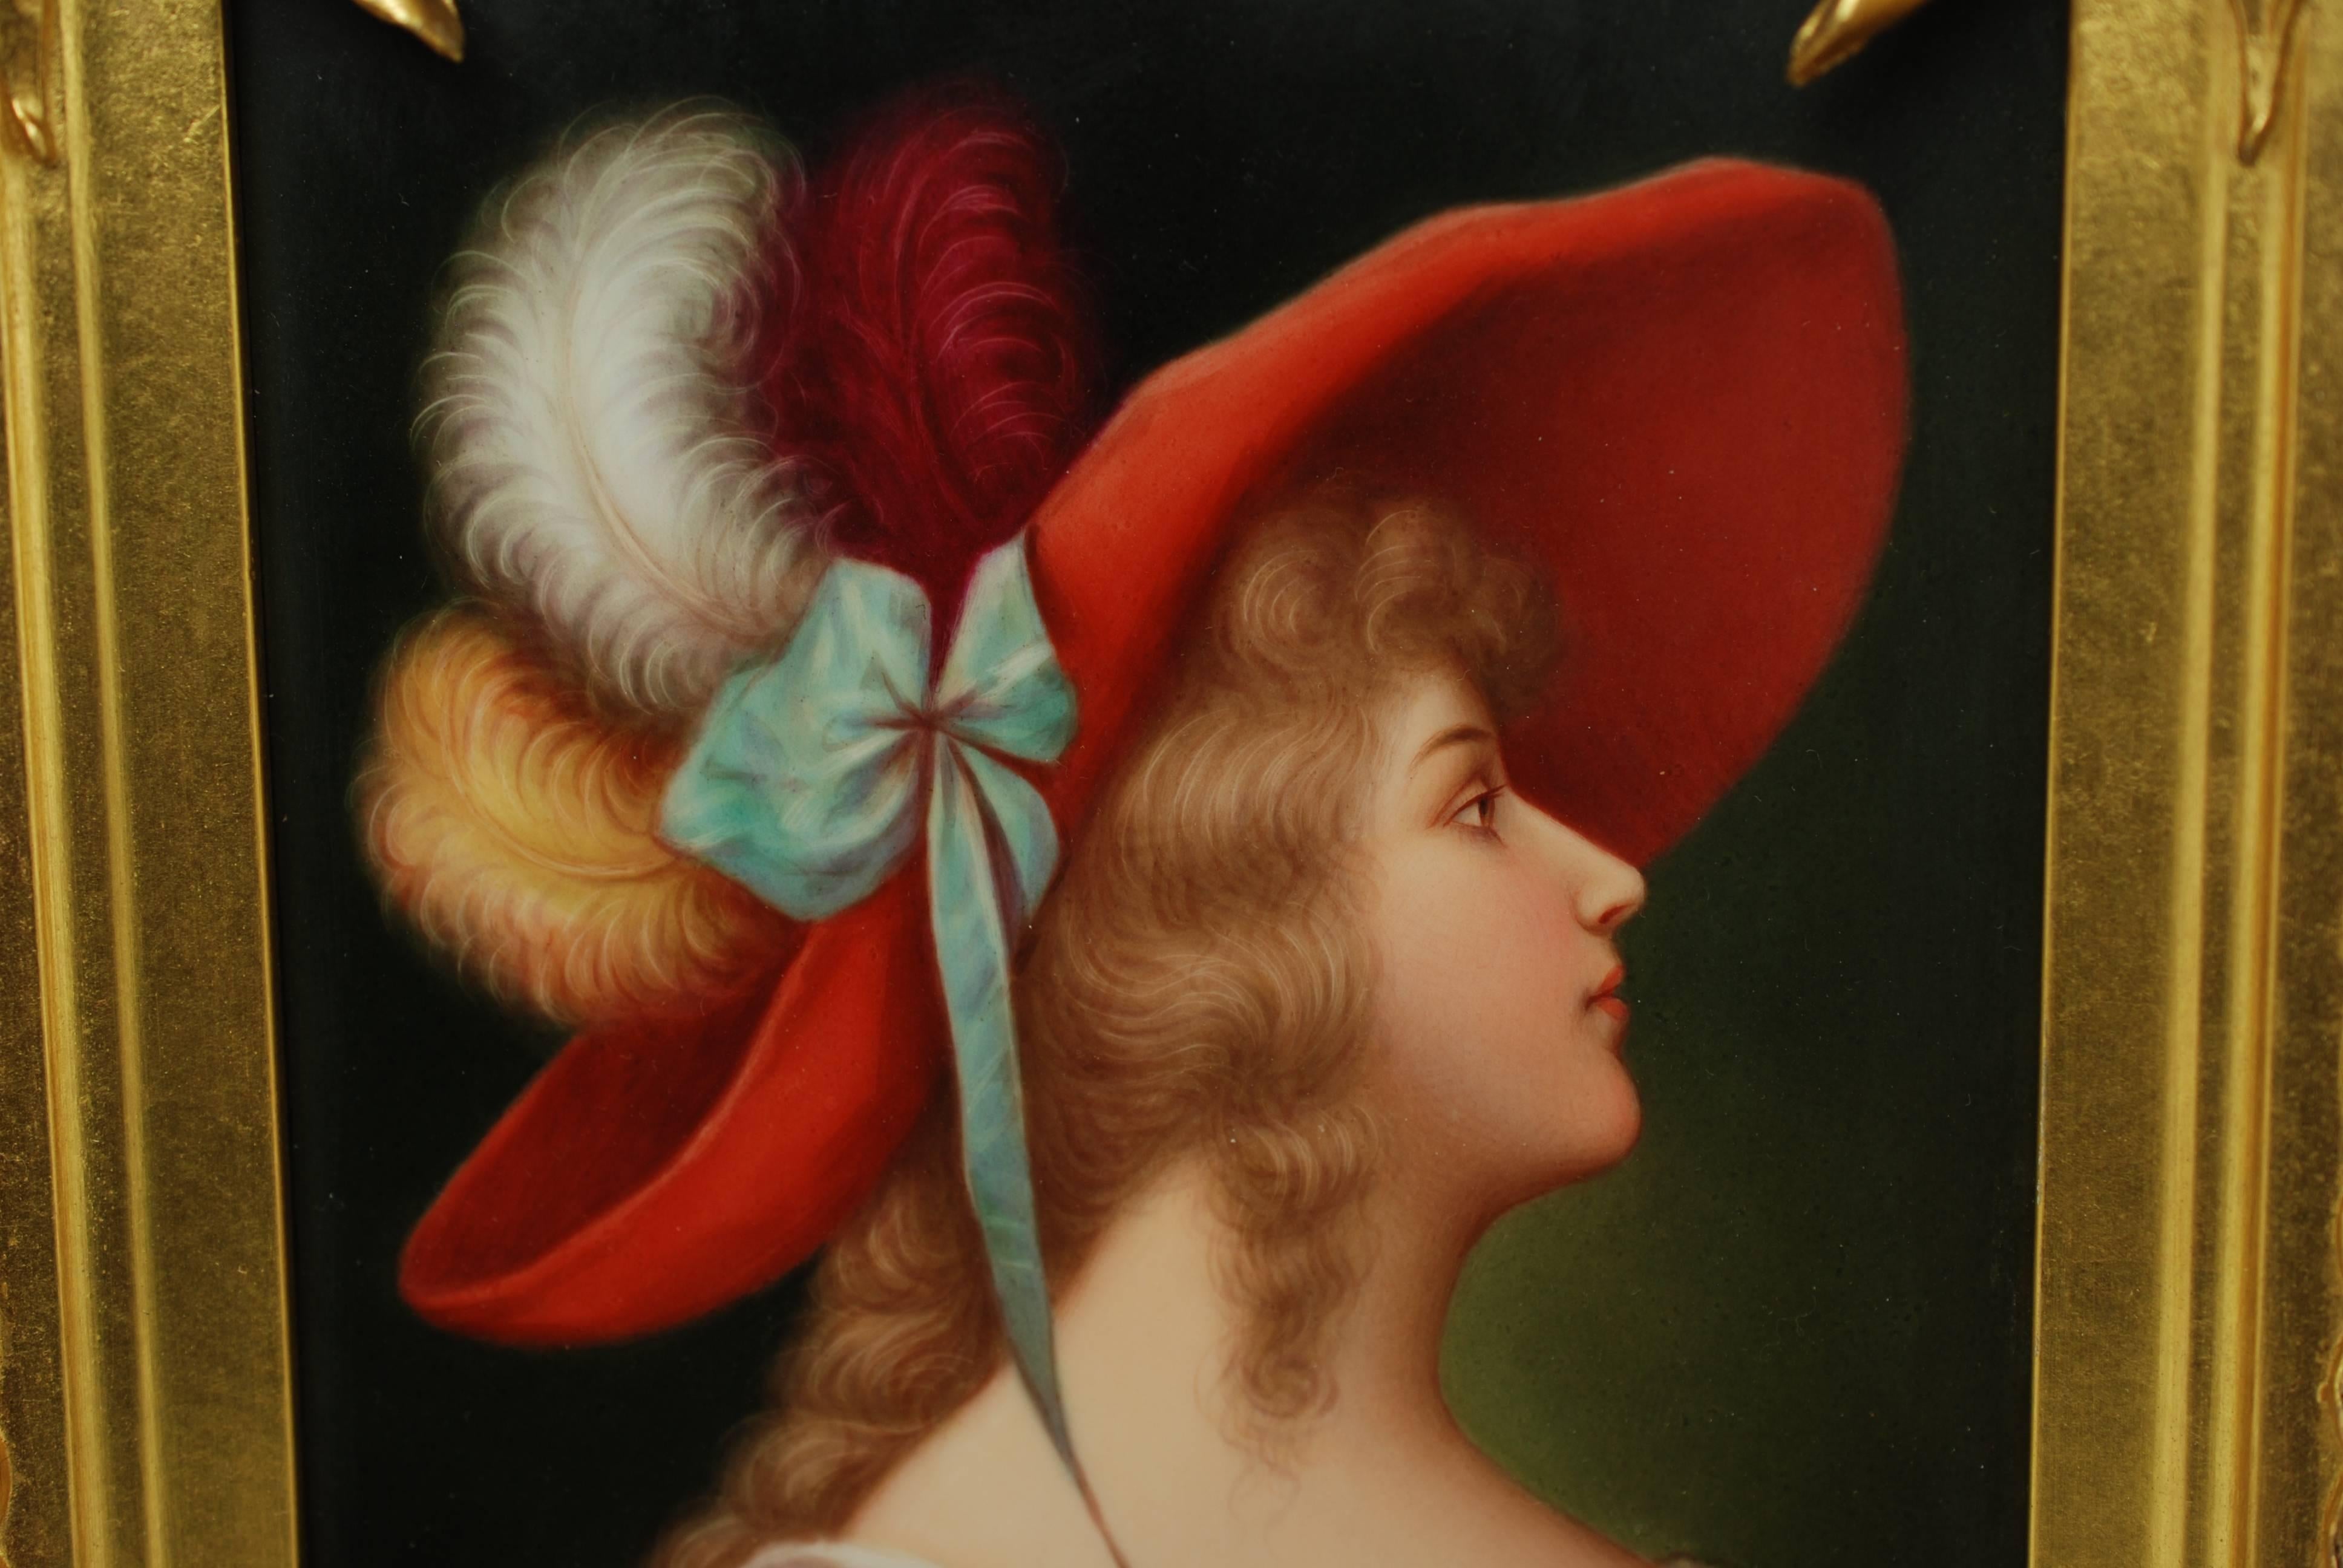 Victorian 19th Century Hand-Painted KPM Porcelain Portrait Plaque in Giltwood Frame